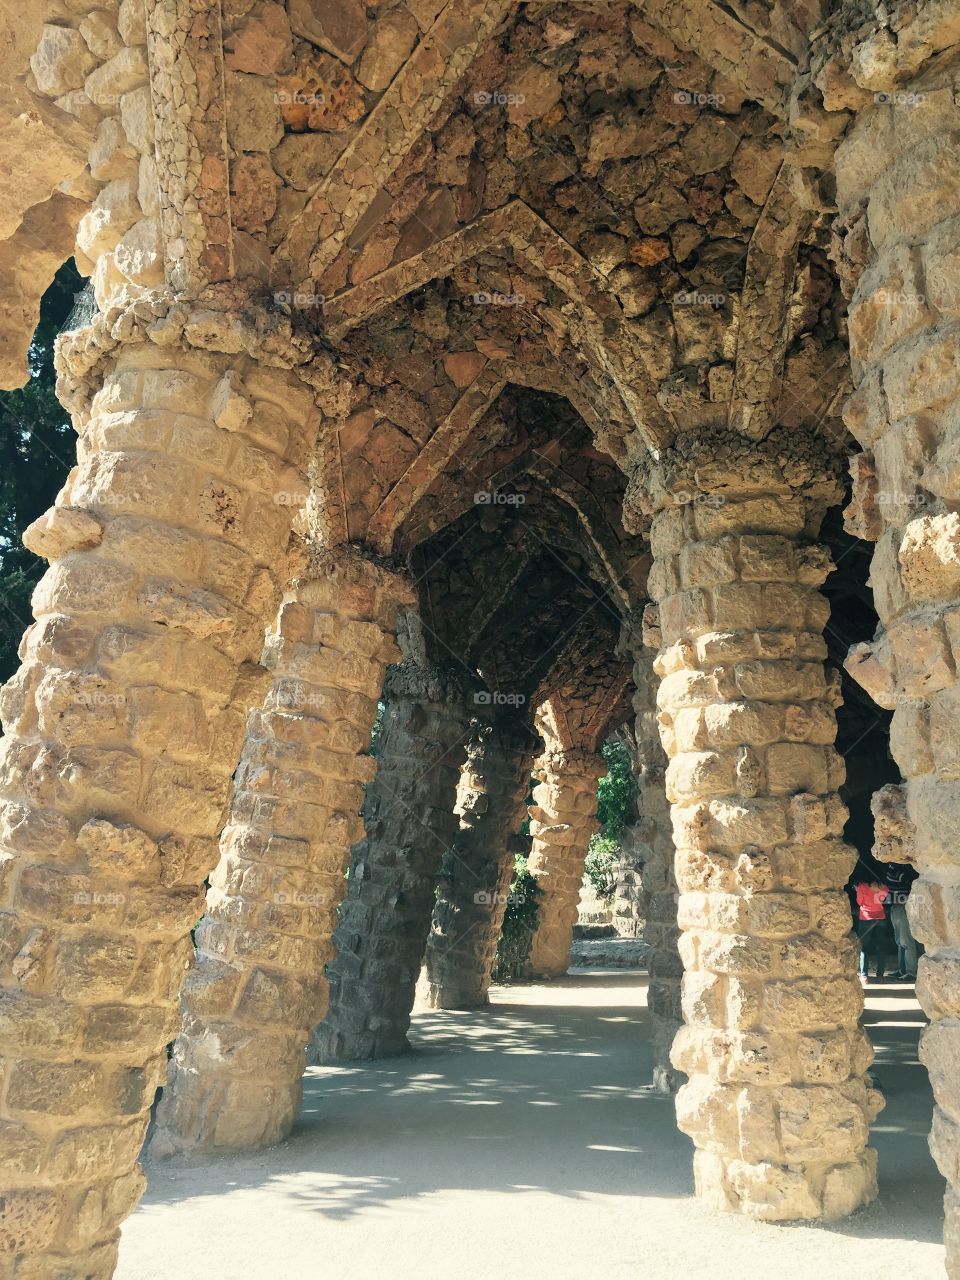 Barcelona park guell tunnel 